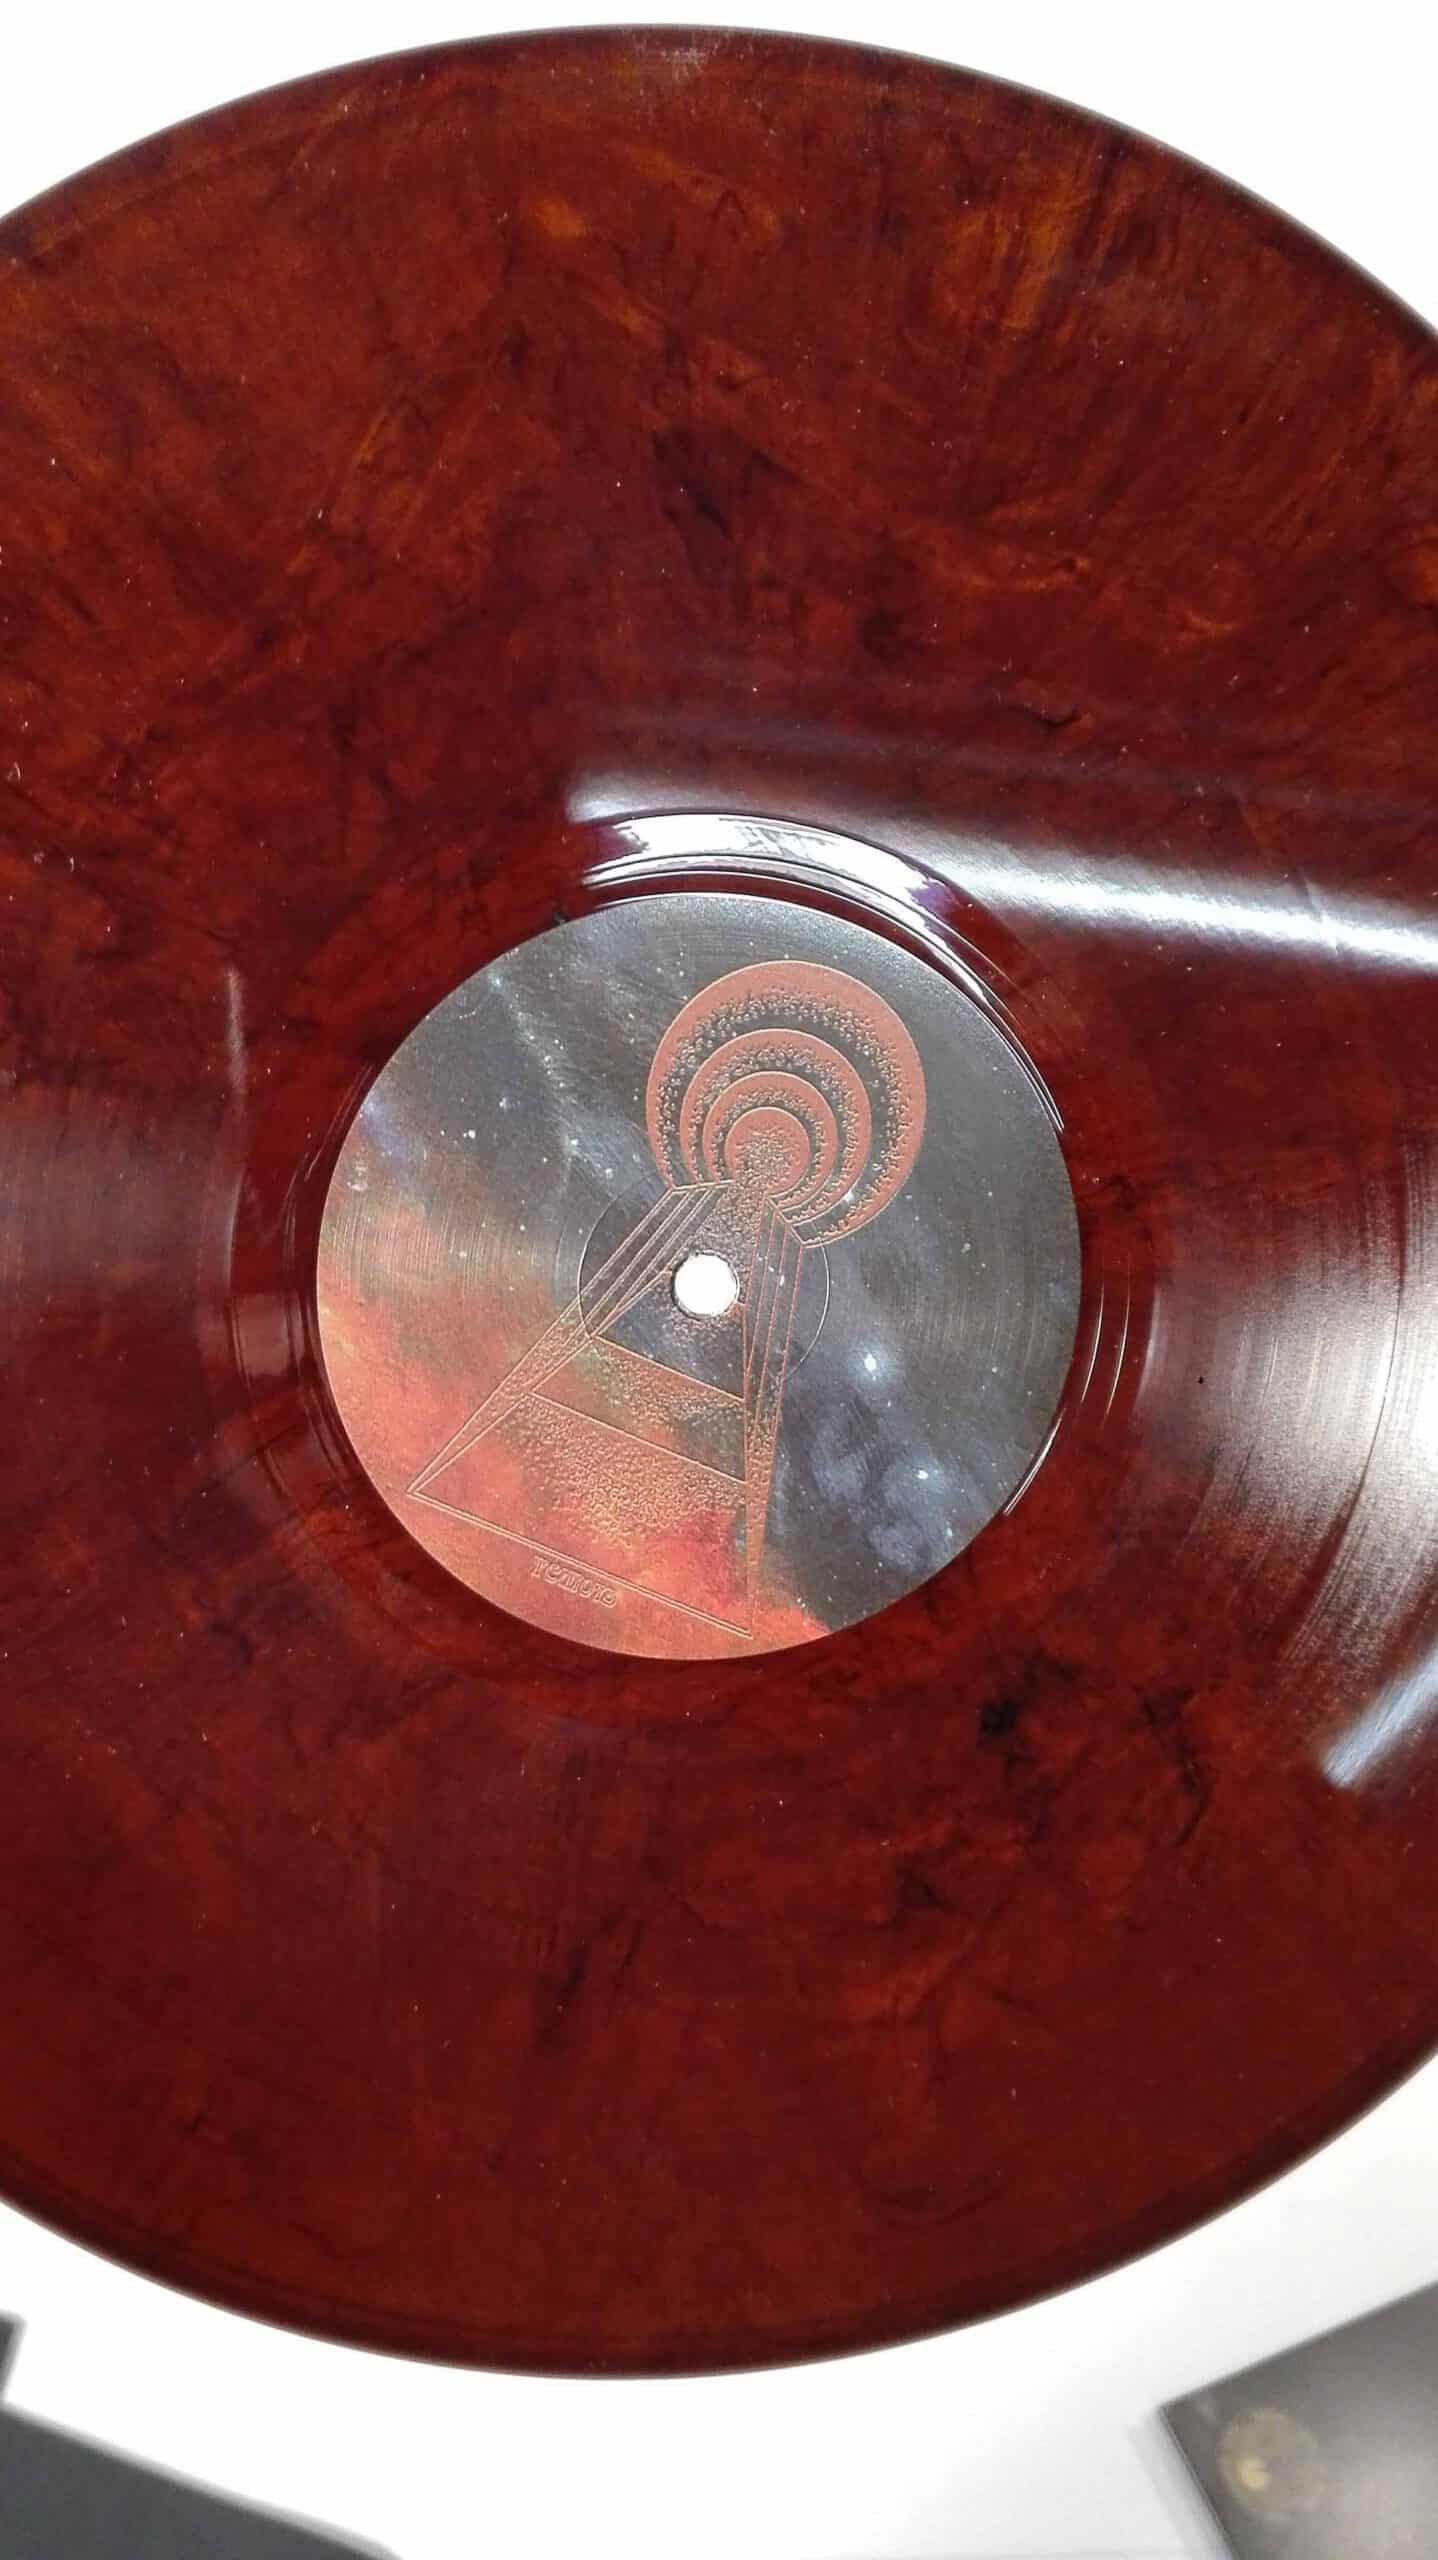 Bask - Ramble Beyond LP/CD/digital Pressing Info: 125x braun/schwarz marbled (mailorder exclusive), 375x orange vinyl